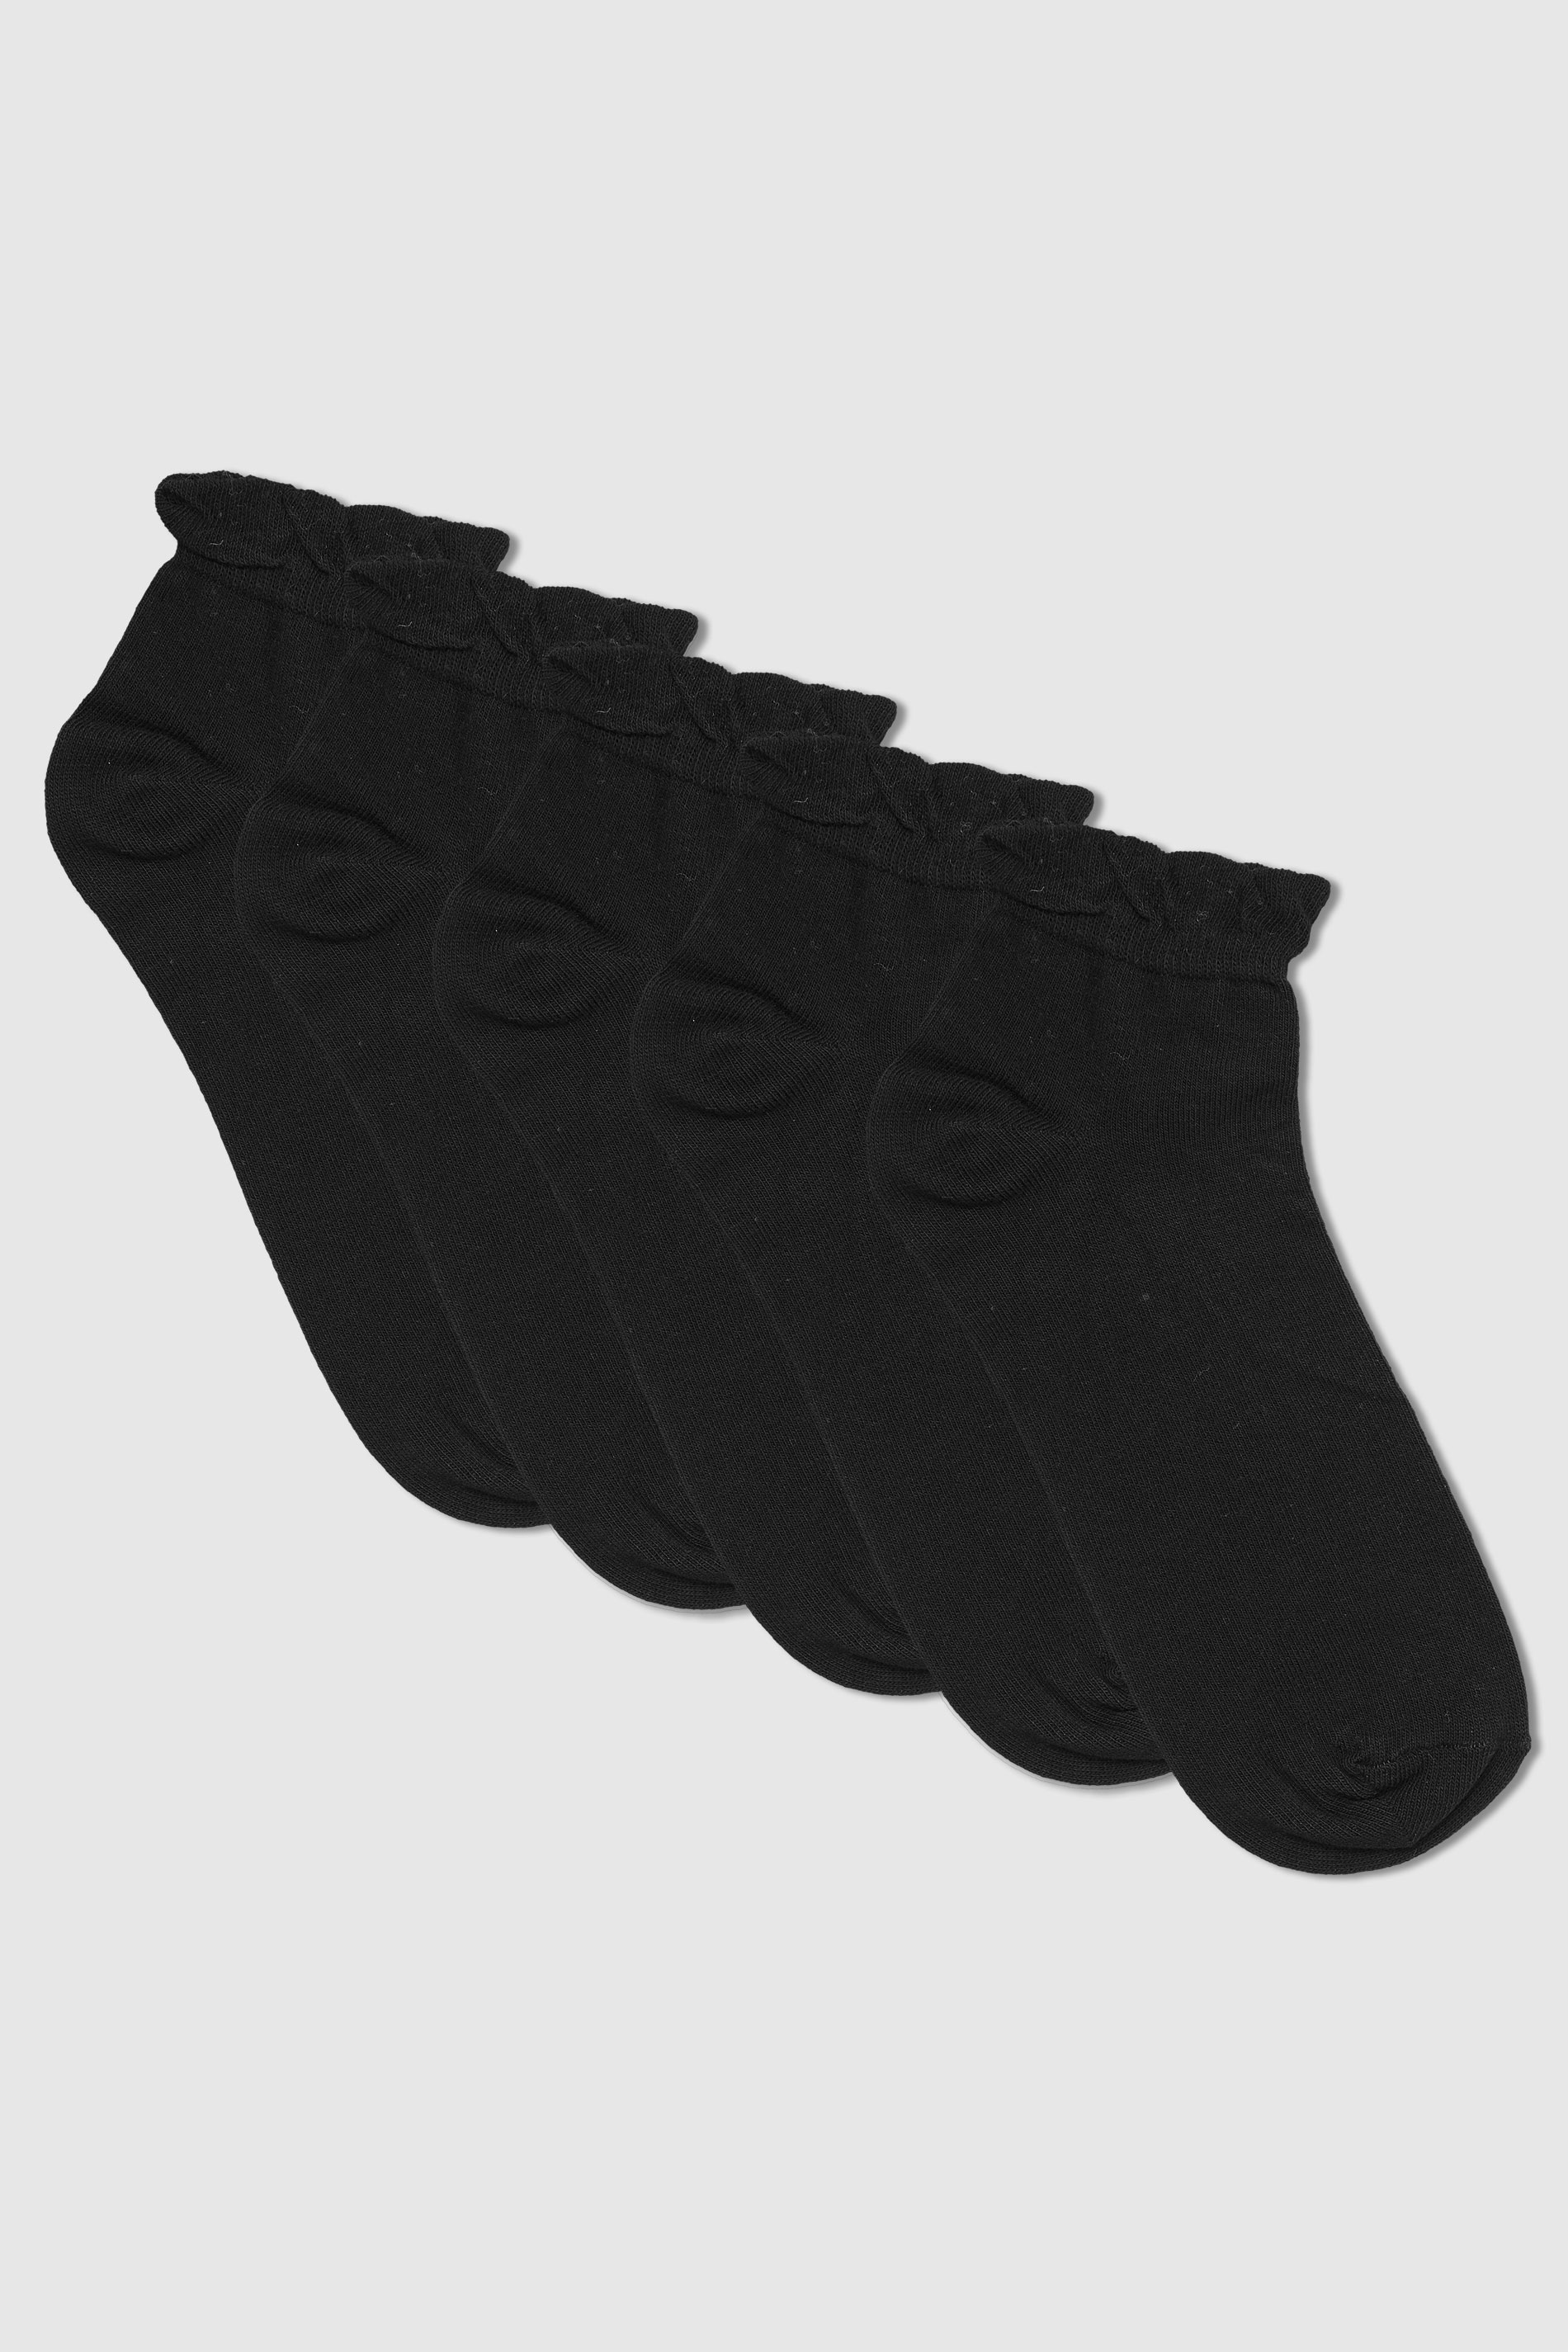 5 PACK Black Trainer Liner Socks | Yours Clothing 2